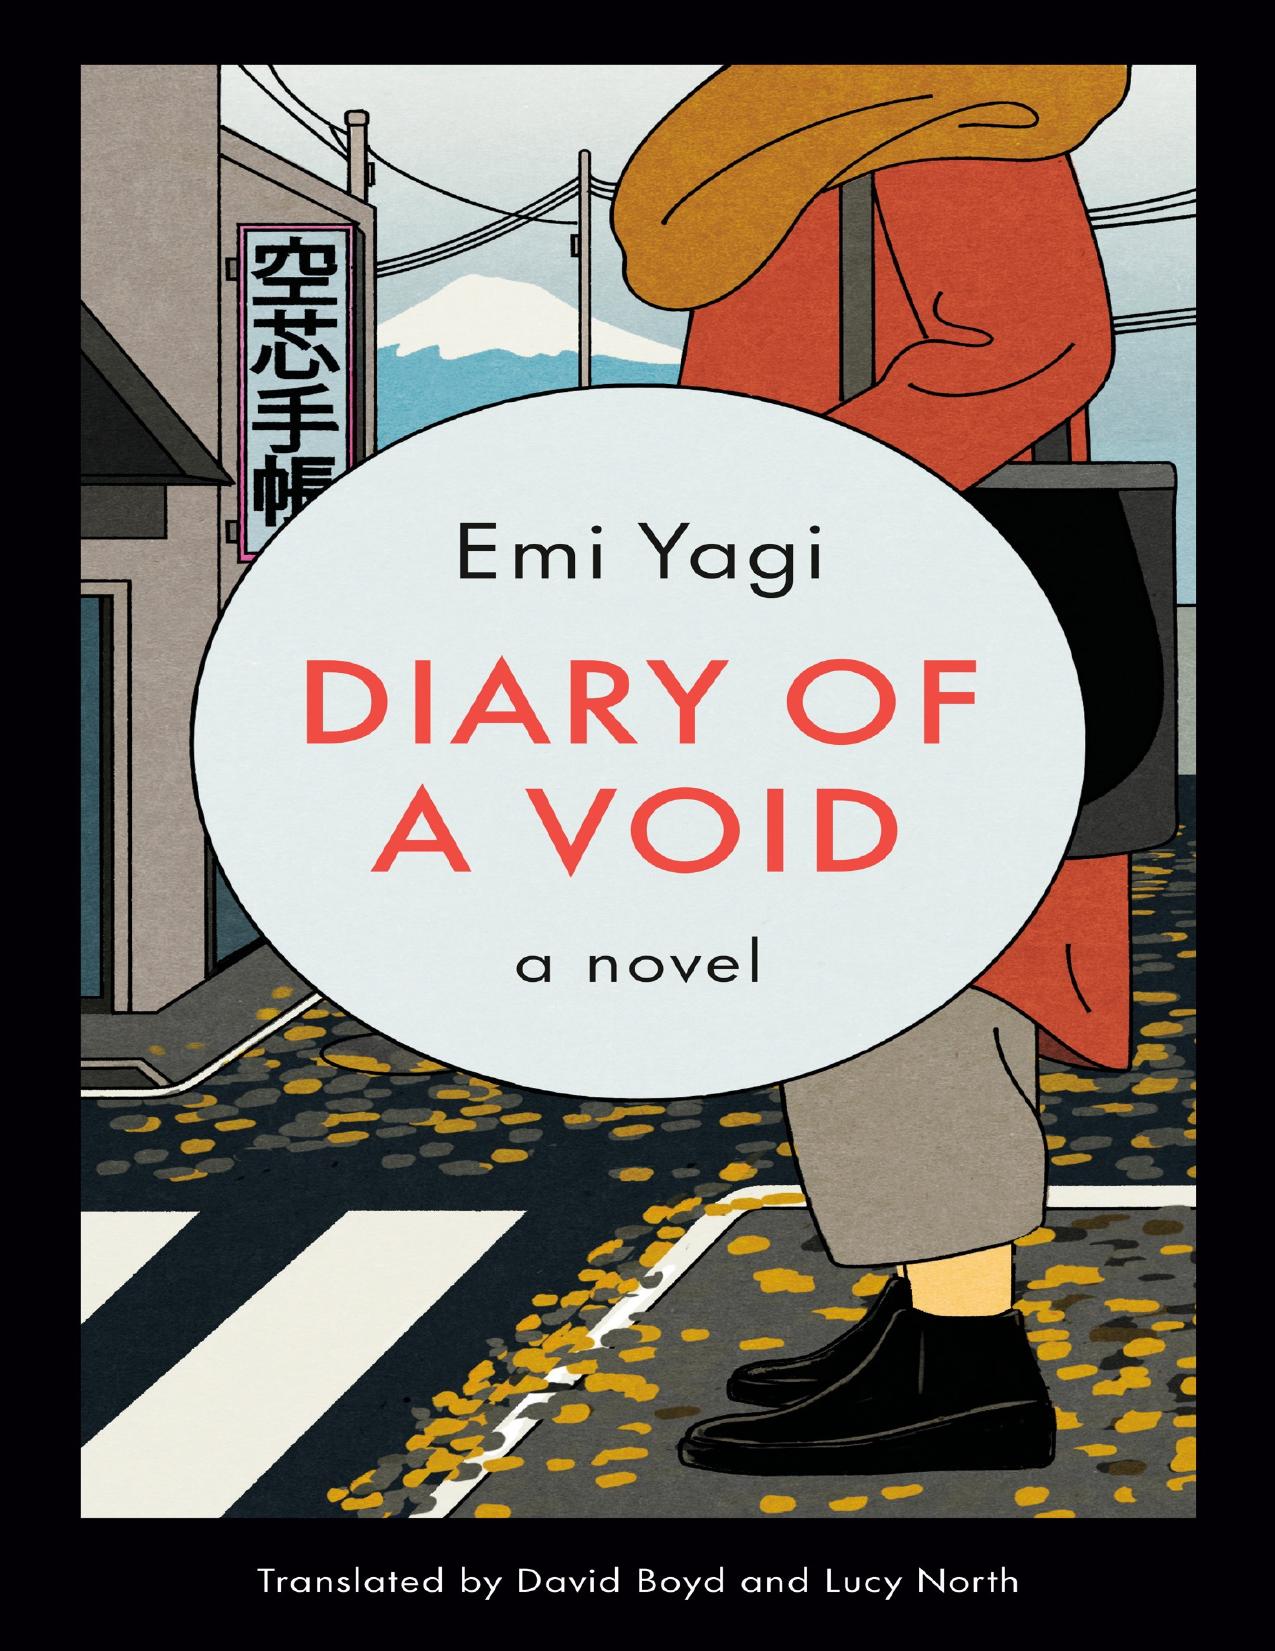 Diary of a Void: A Novel by Emi Yagi